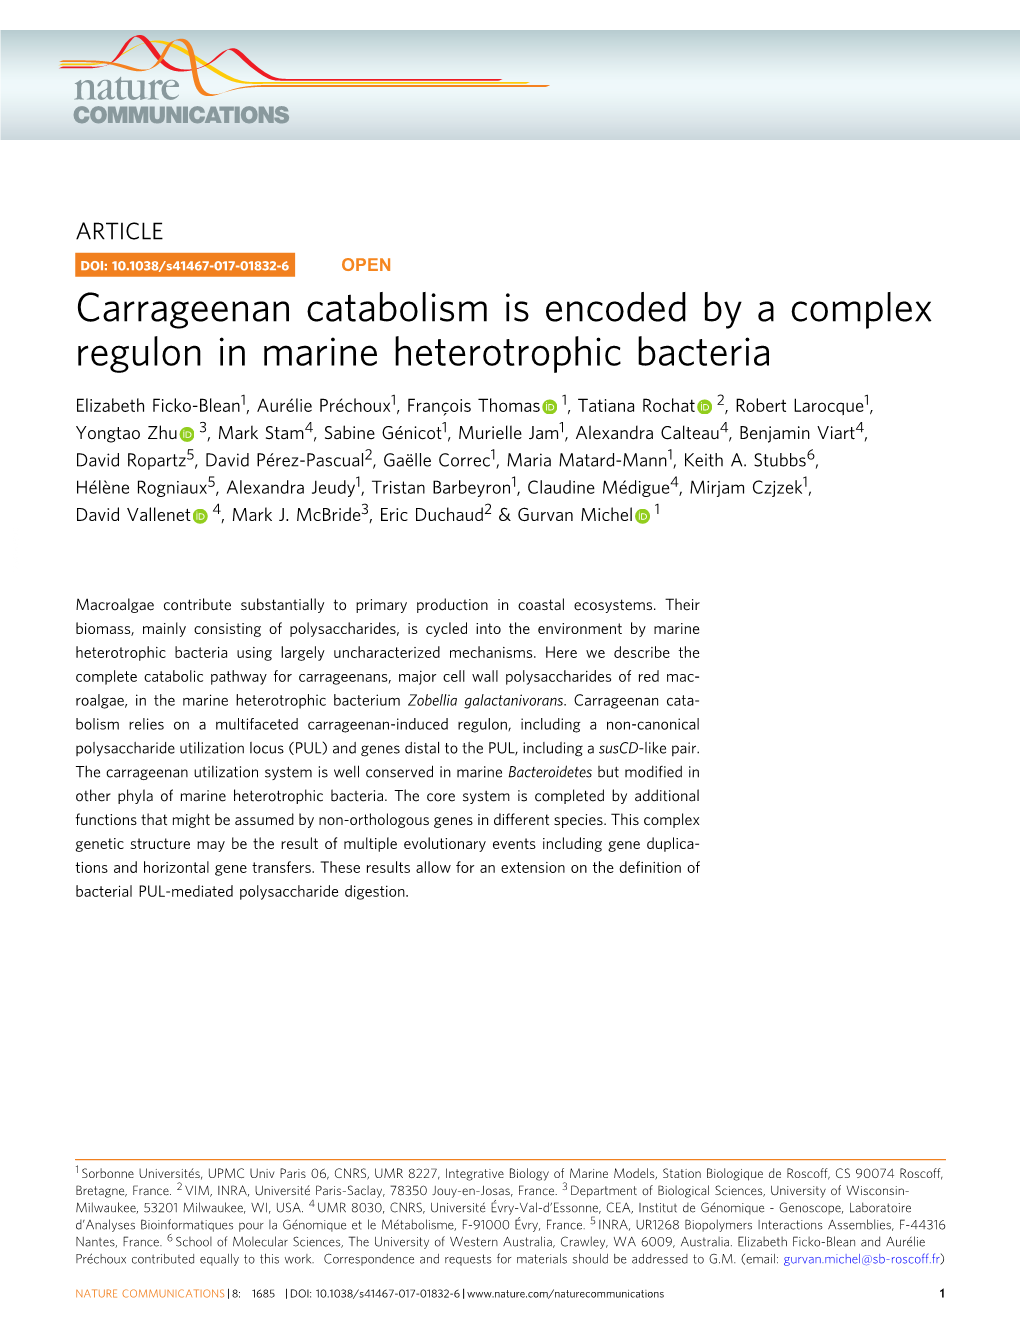 Carrageenan Catabolism Is Encoded by a Complex Regulon in Marine Heterotrophic Bacteria